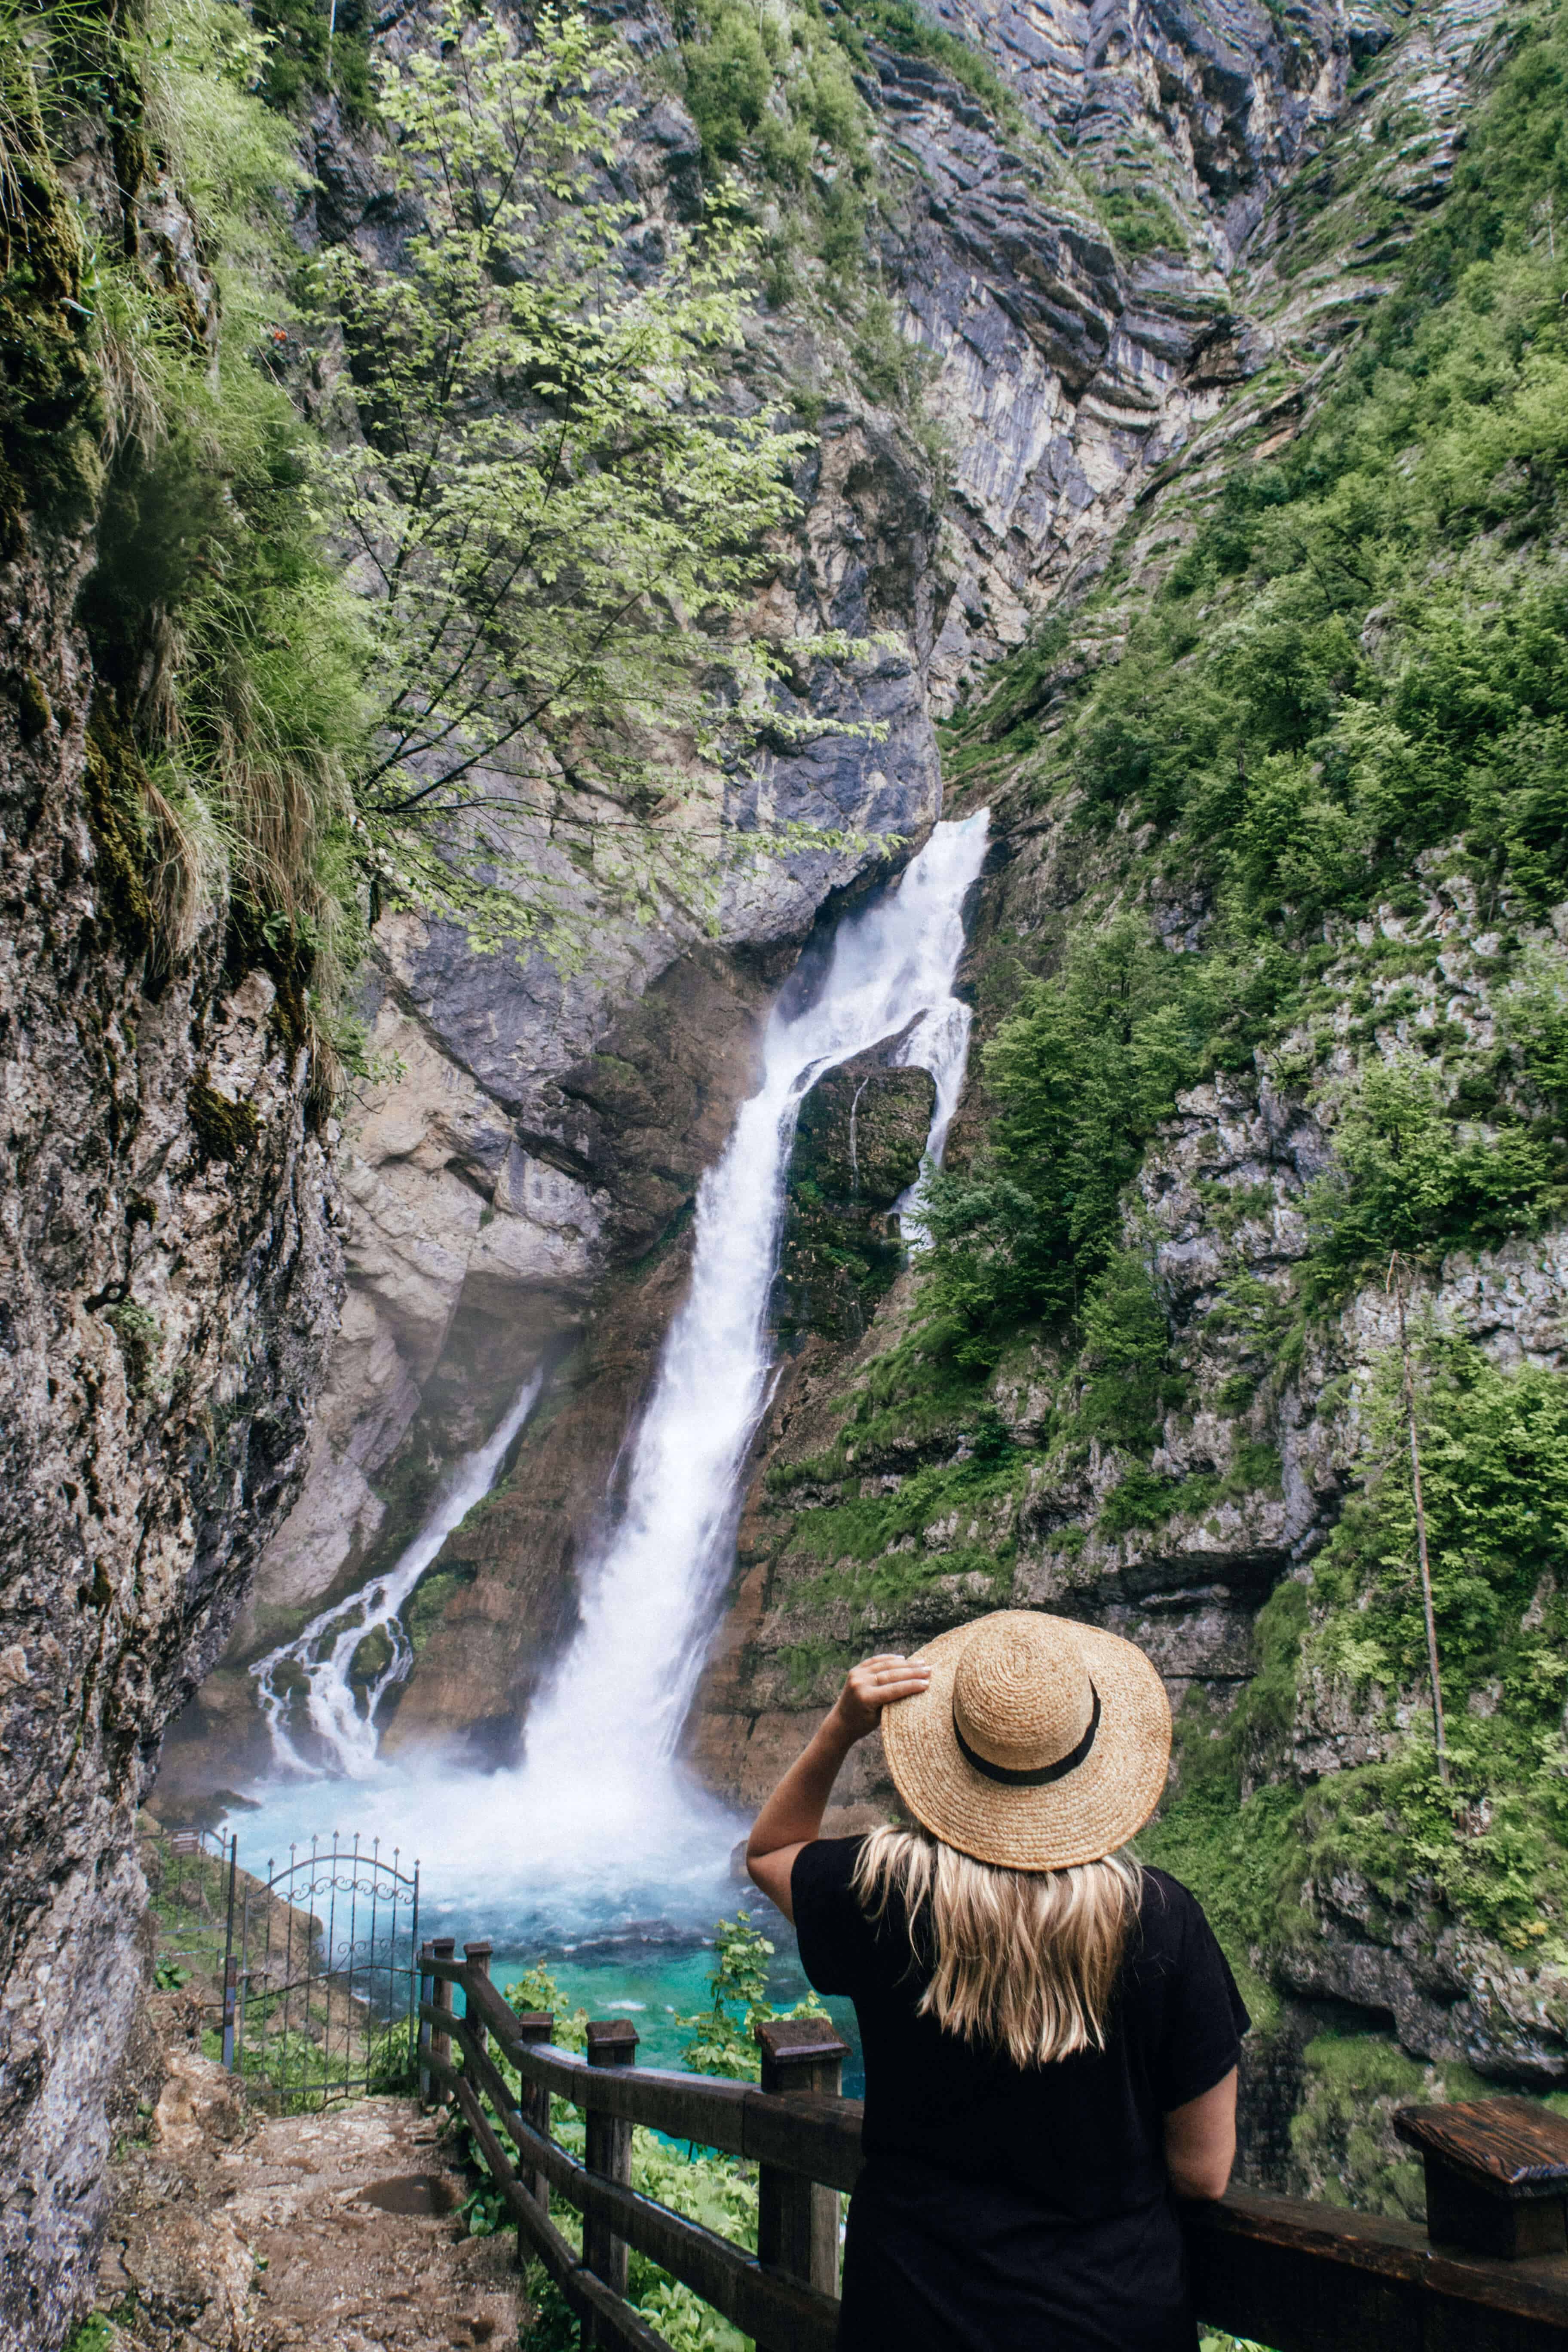 The Ultimate Guide to Lake Bohinj Slovenia | Slap Savica waterfall | The Republic of Rose | #Slovenia #Bohinj #LakeBohinj #Europe #Travel